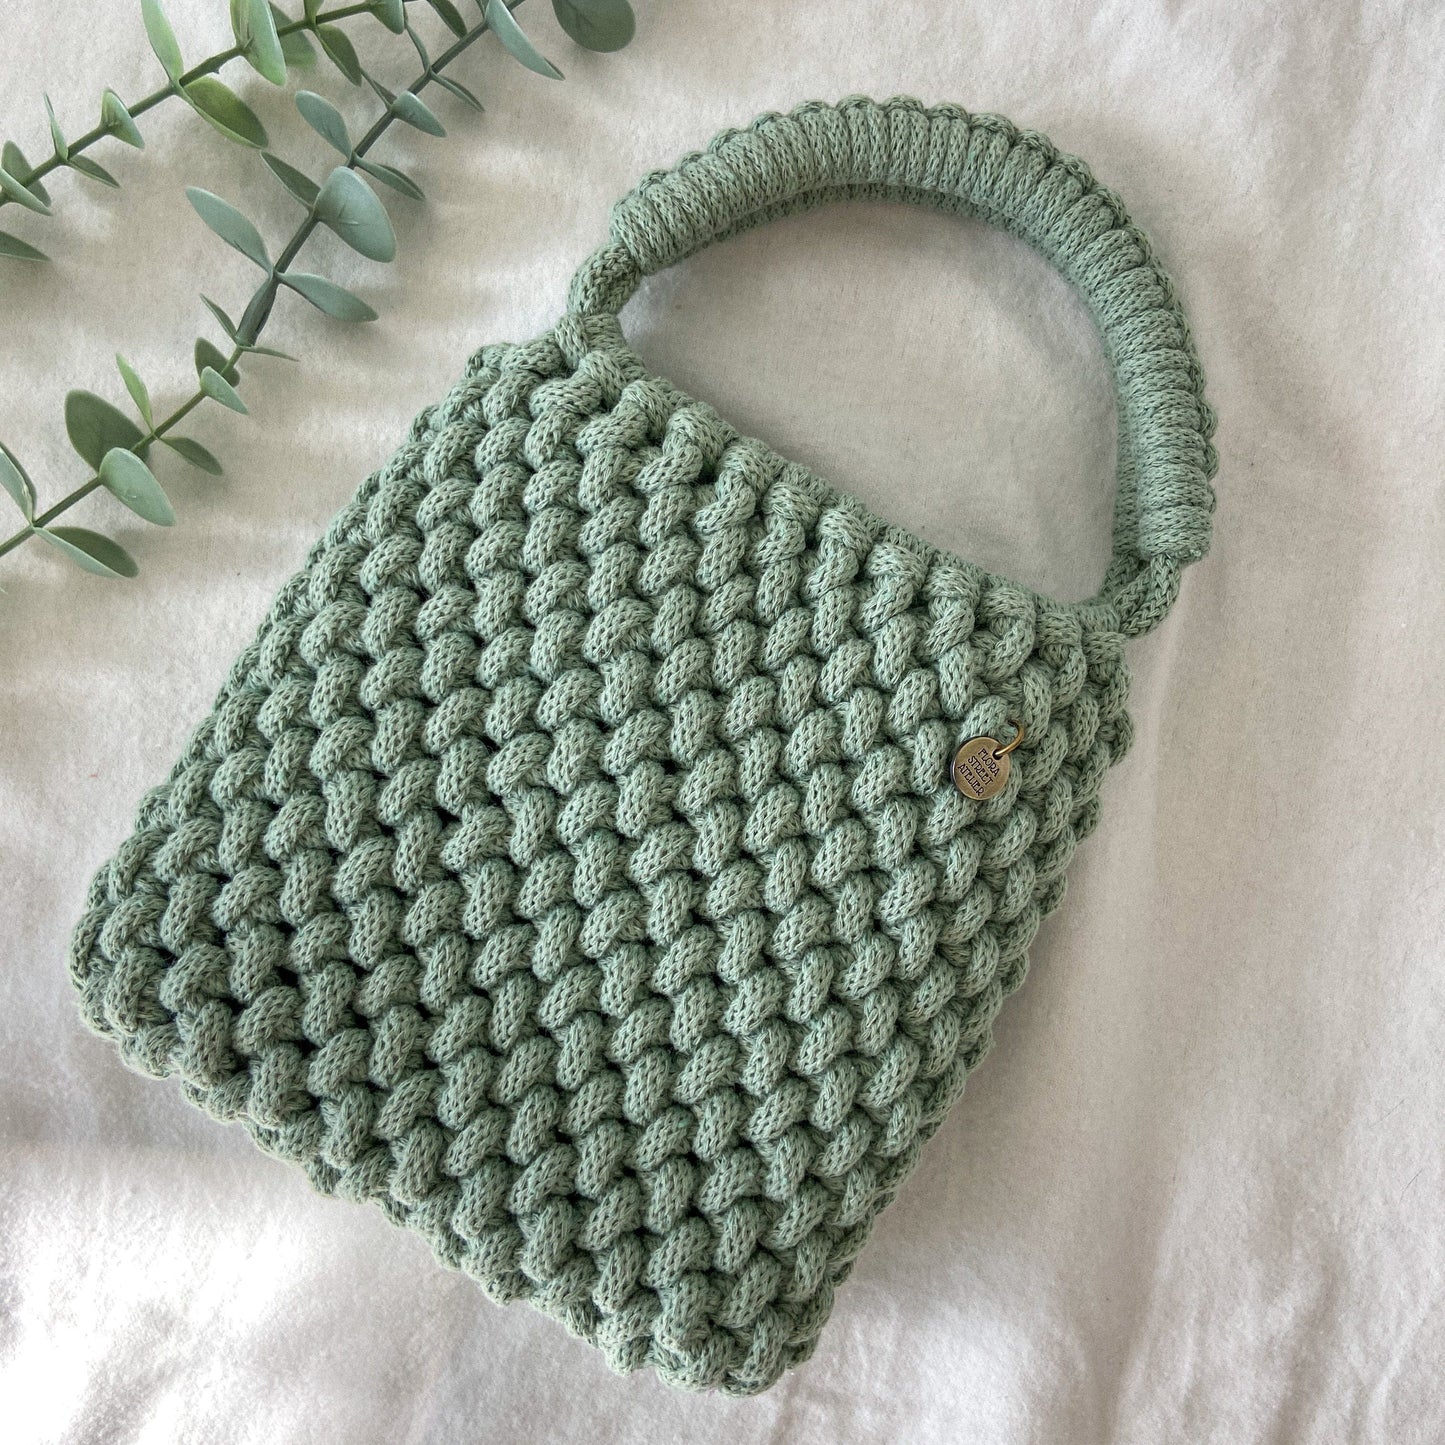 Flora Street Atelier Handmade Macrame Bag "Kiwi" Macrame Mini Tote Bag